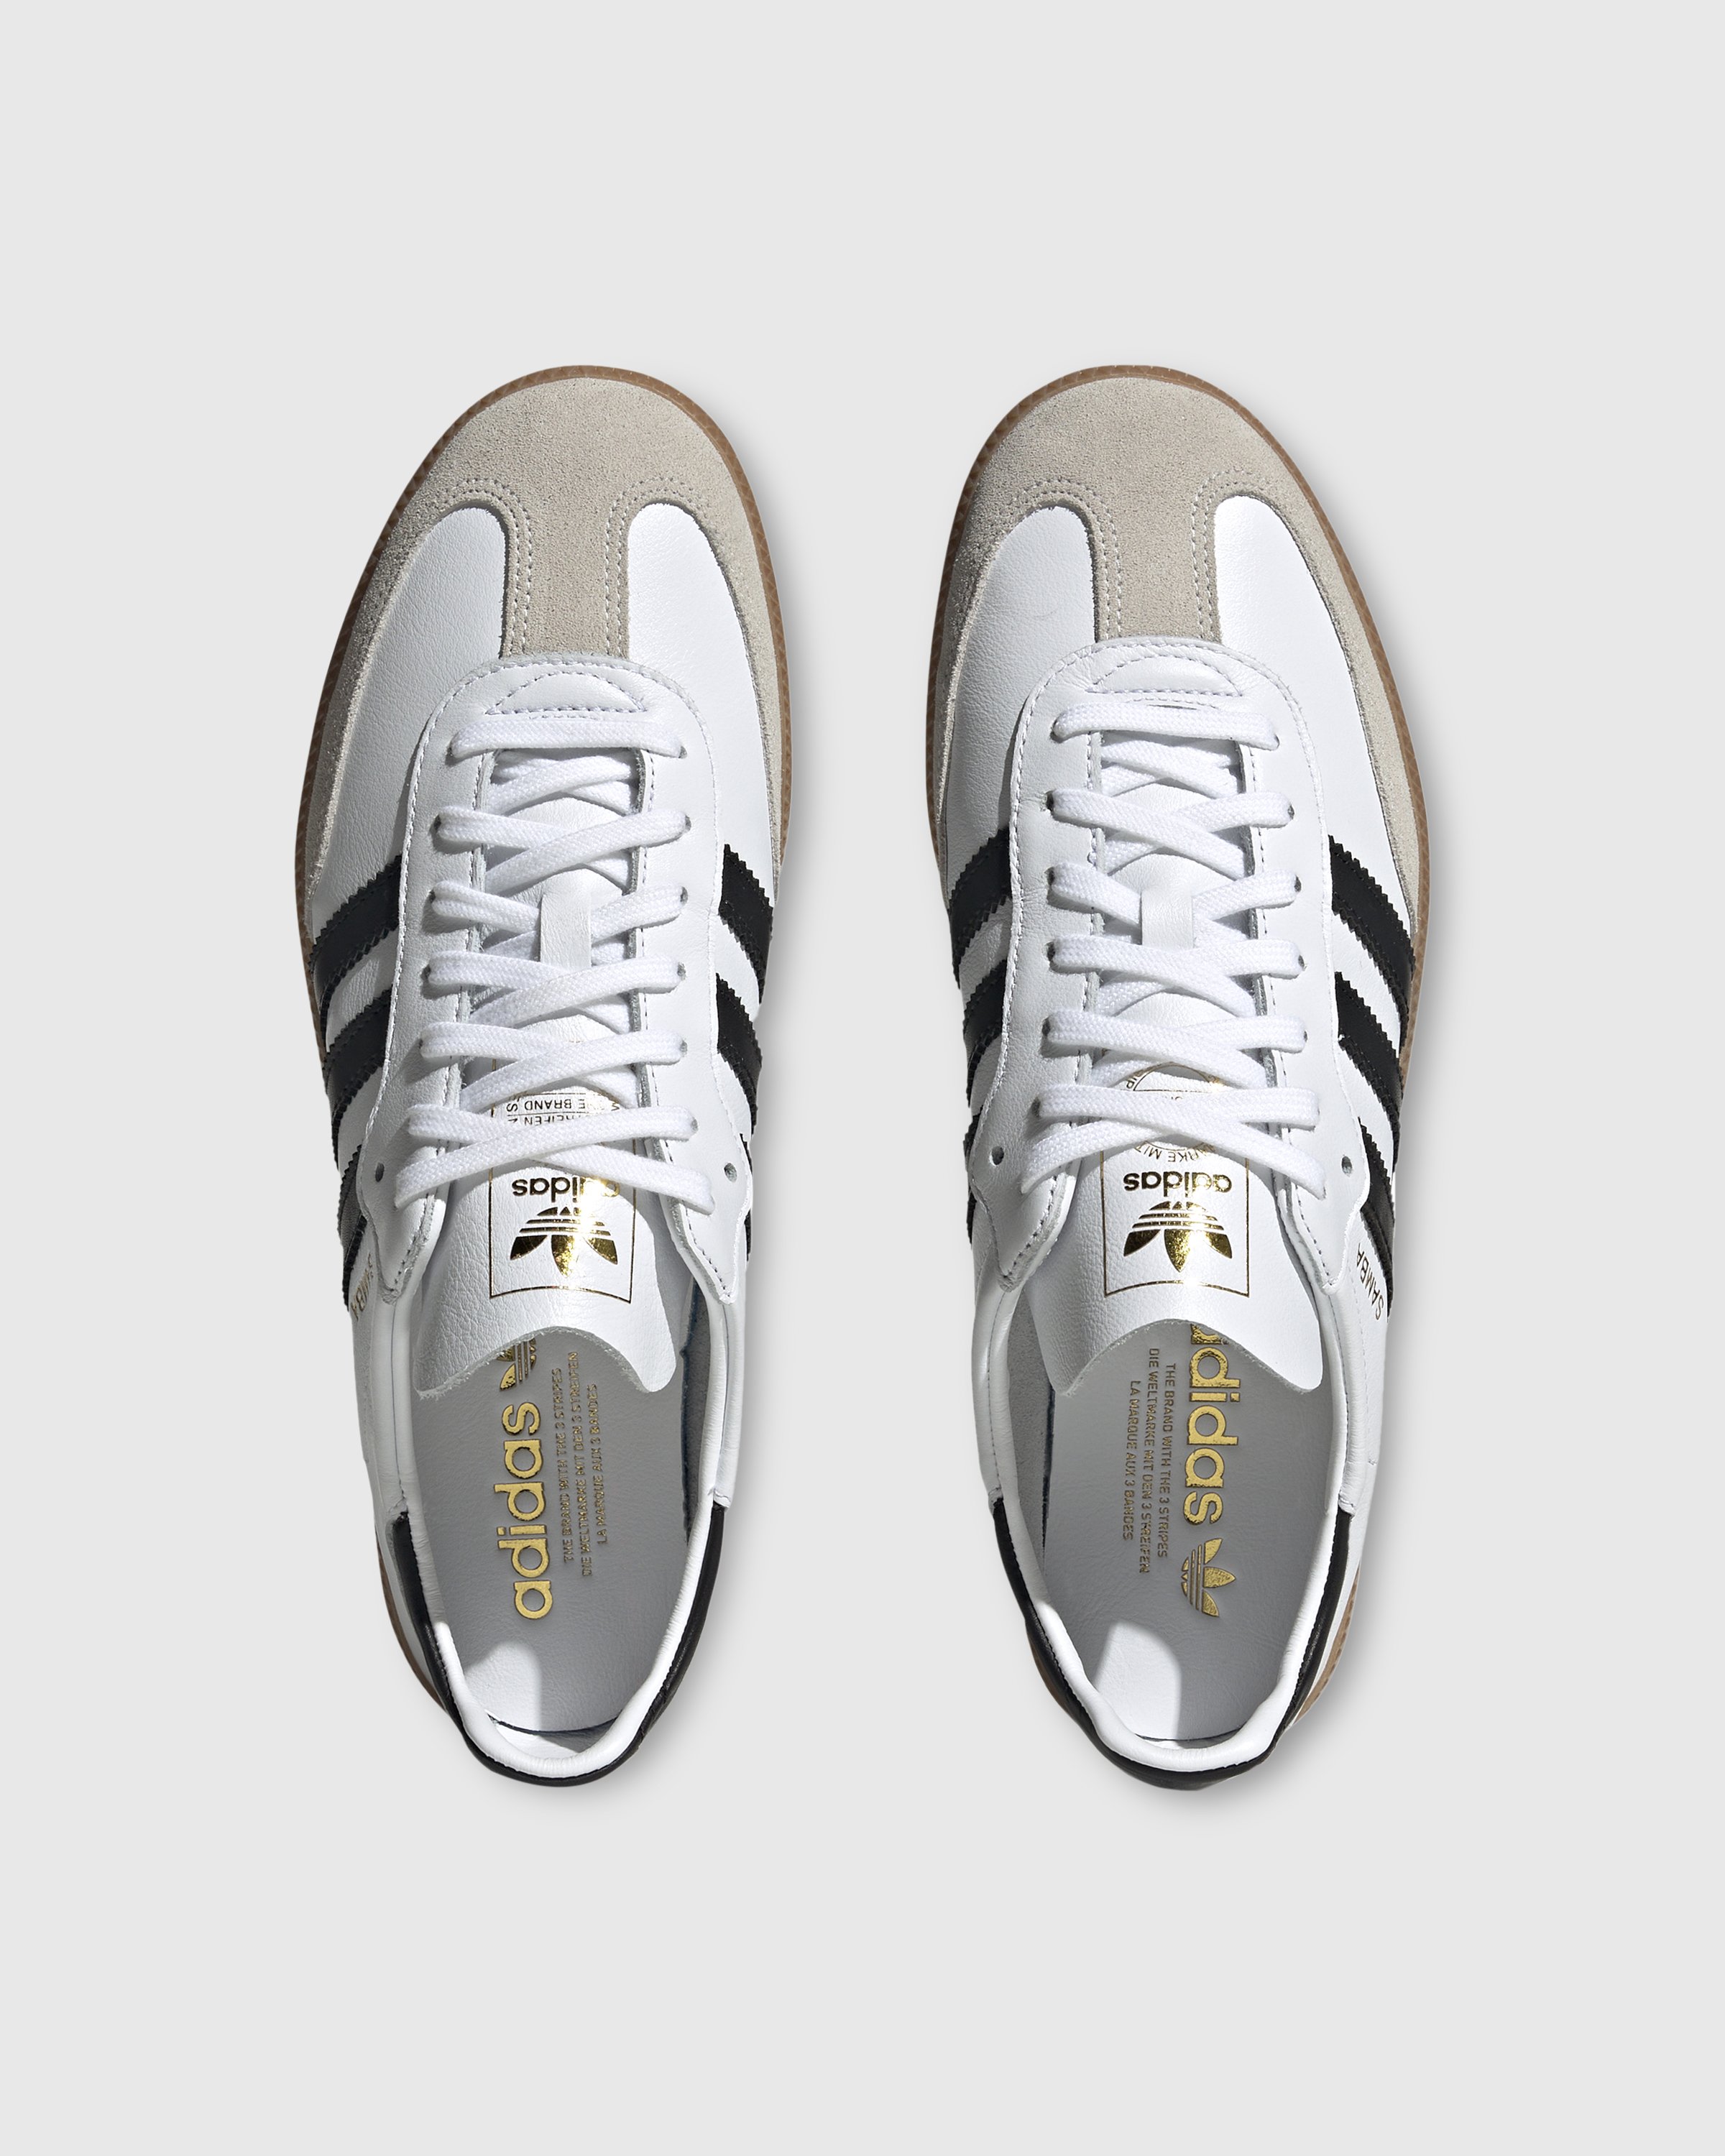 Adidas - Samba Decon White/Black/Greone - Footwear - White - Image 4